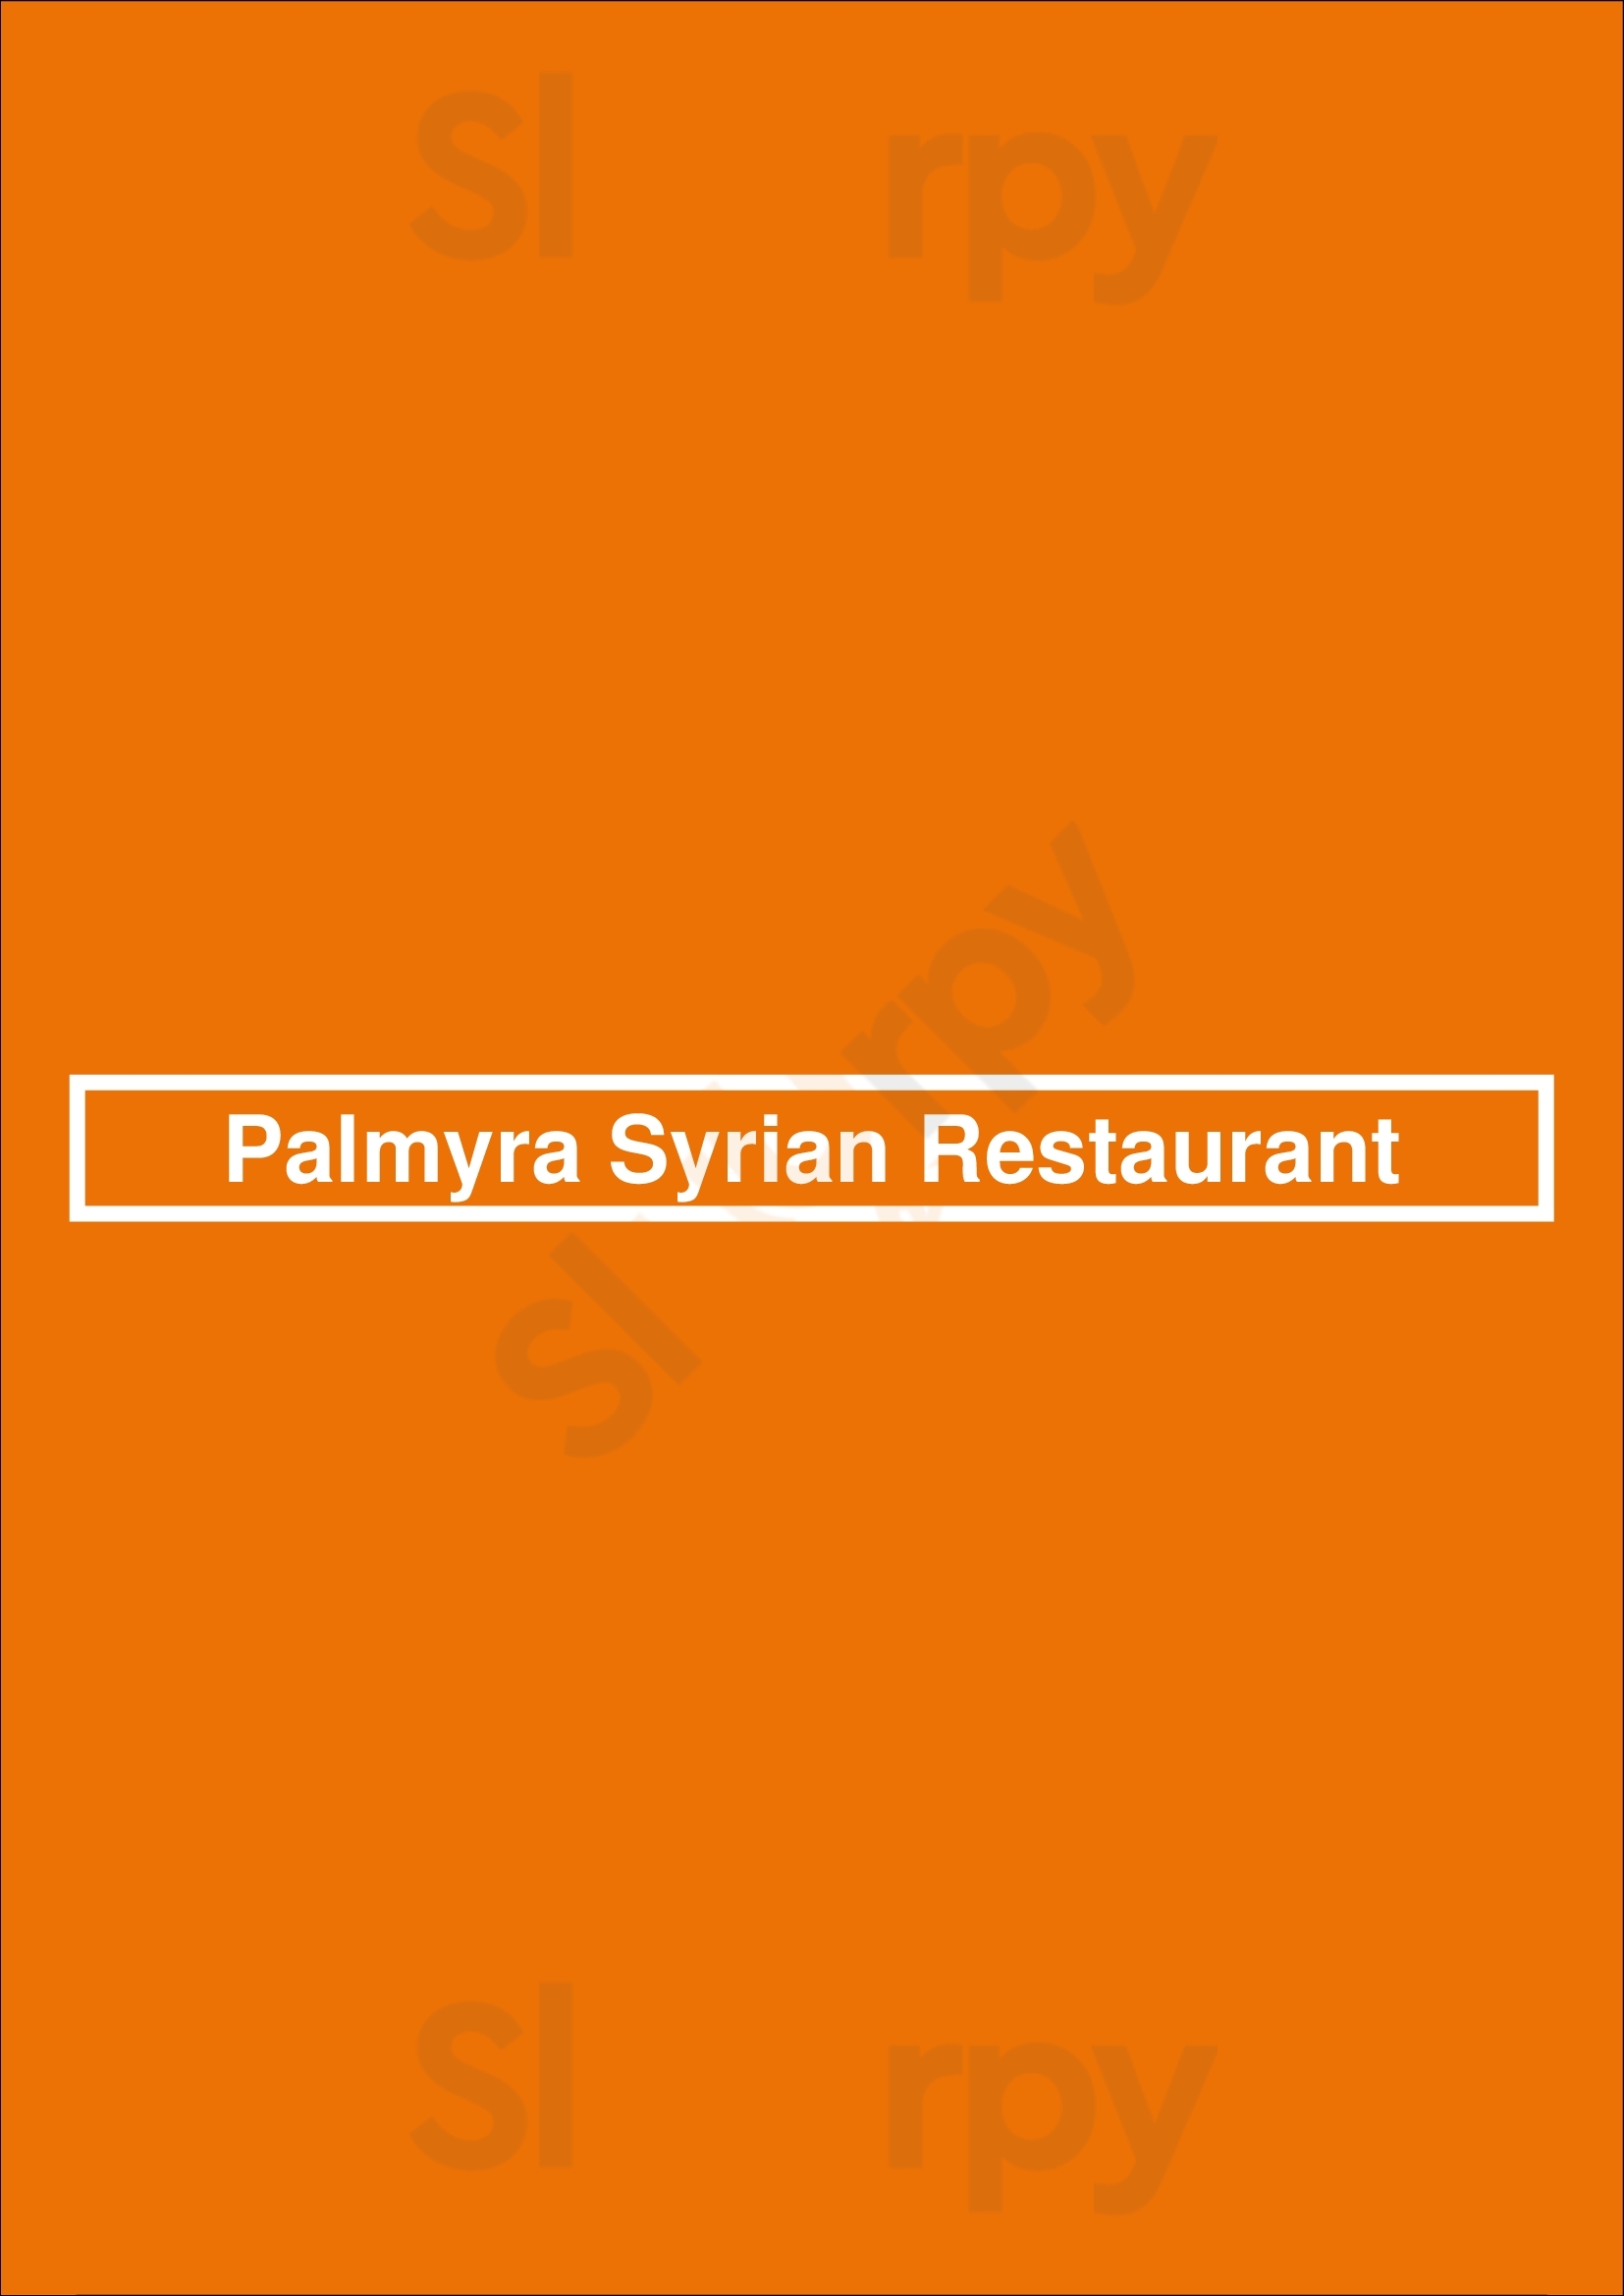 Palmyra Syrian Restaurant Amsterdam Menu - 1